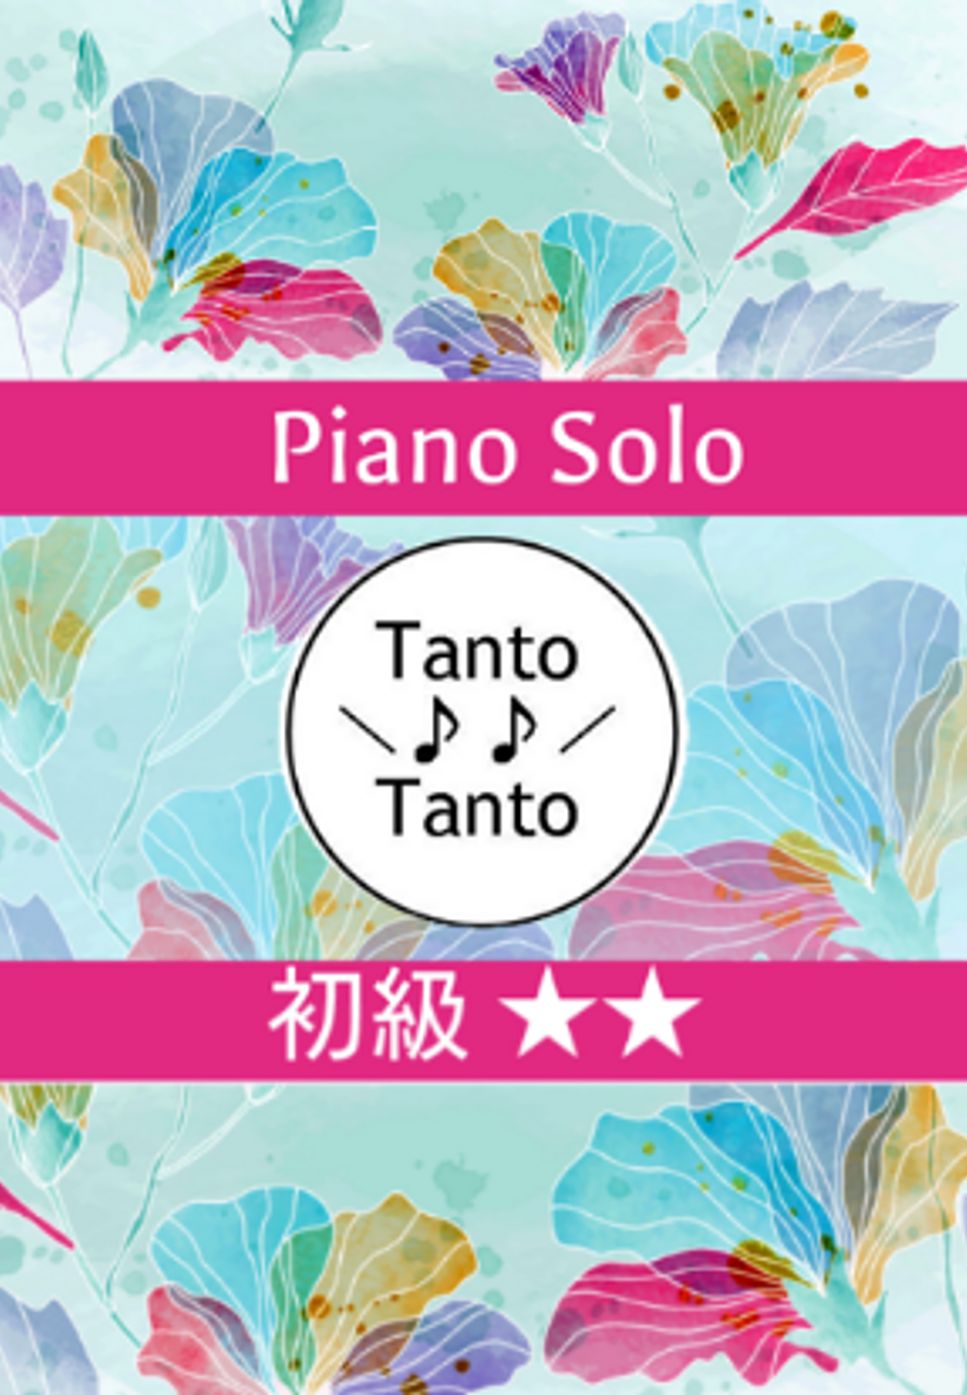 Alan Menken - PRINCE ALI｛ALADDIN｝アリ王子のお通り (Piano Solo in Am) by Tanto Tanto